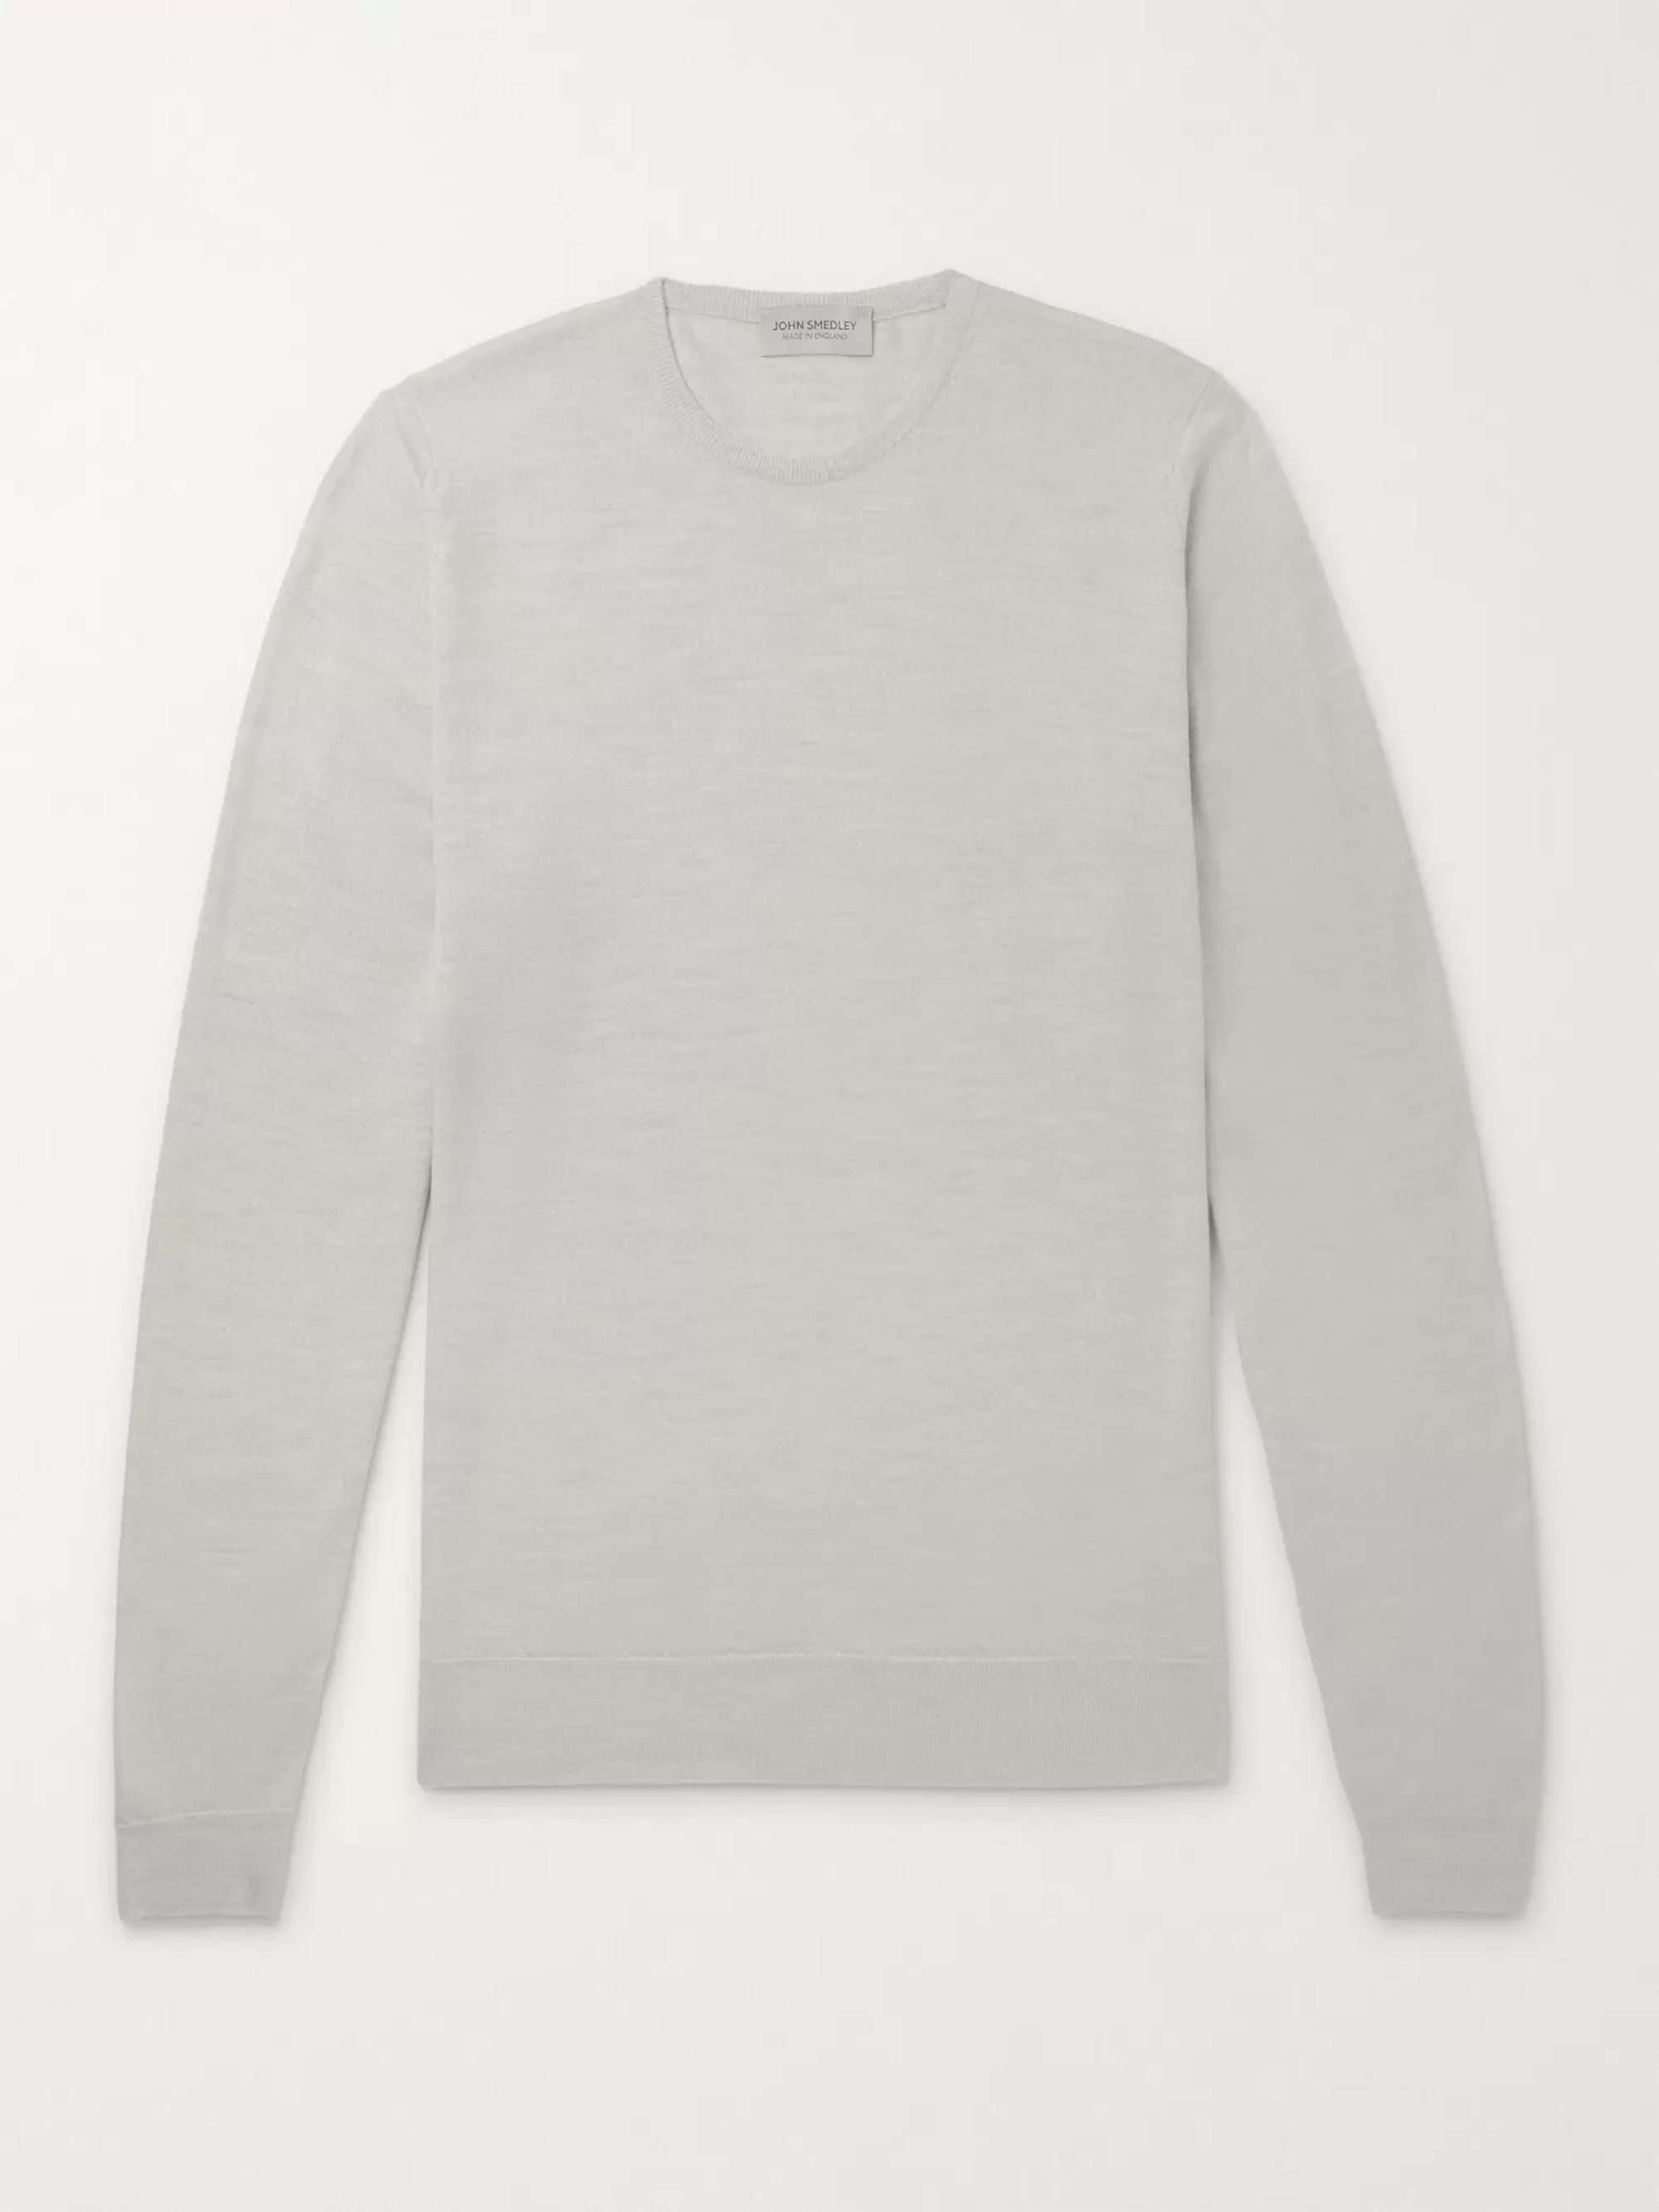 JOHN SMEDLEY Lundy Slim-Fit Merino Wool Sweater